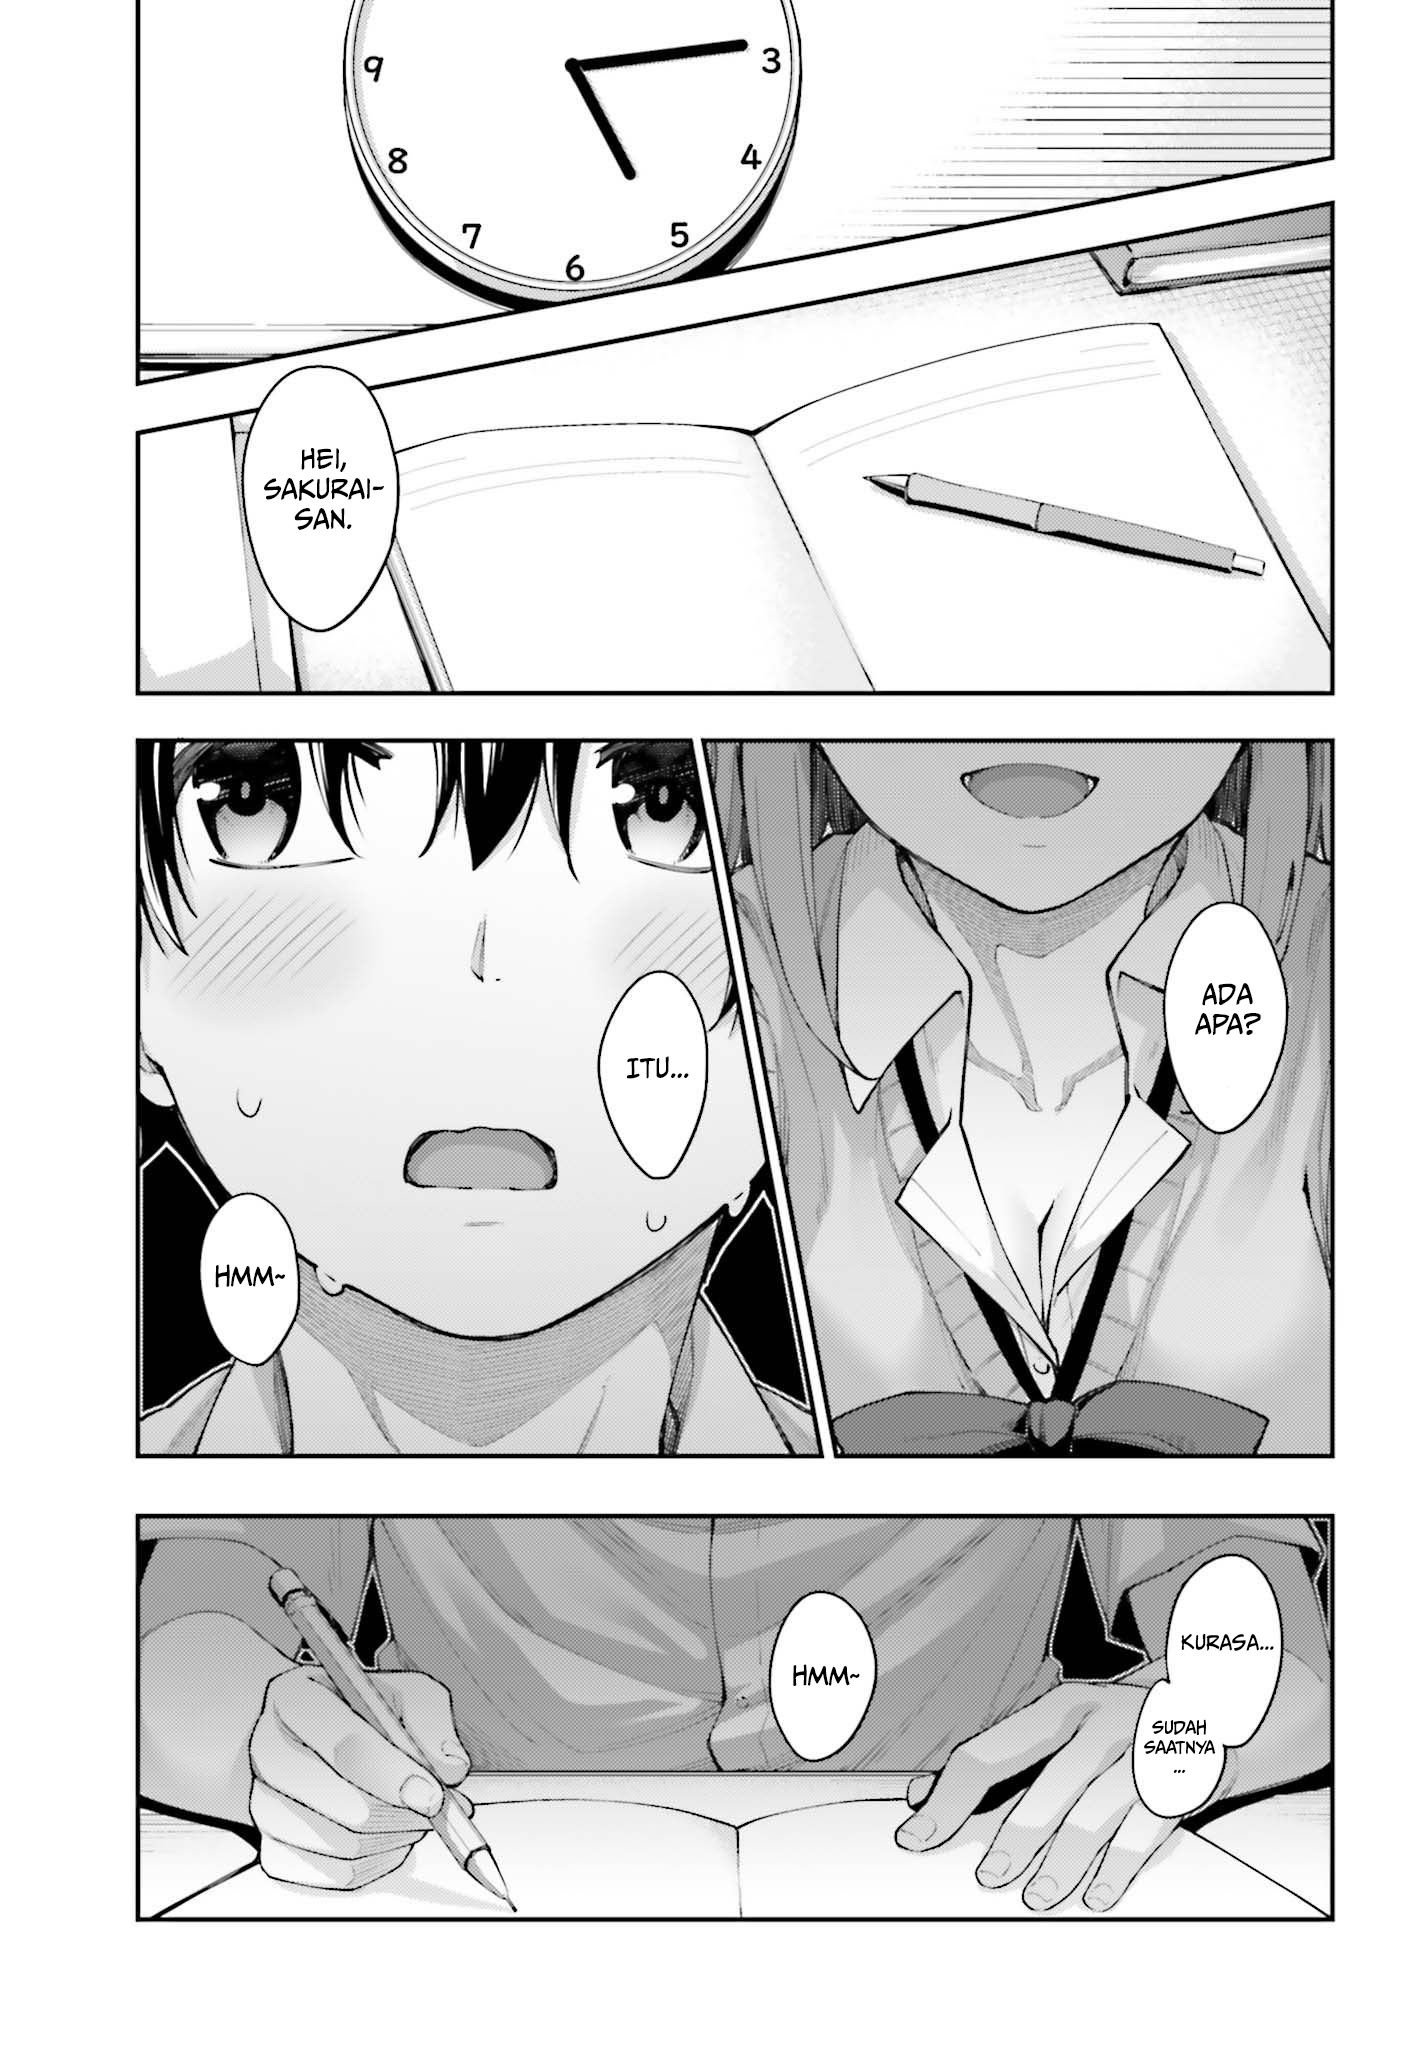 Sakurai-san Wants To Be Noticed Chapter 02